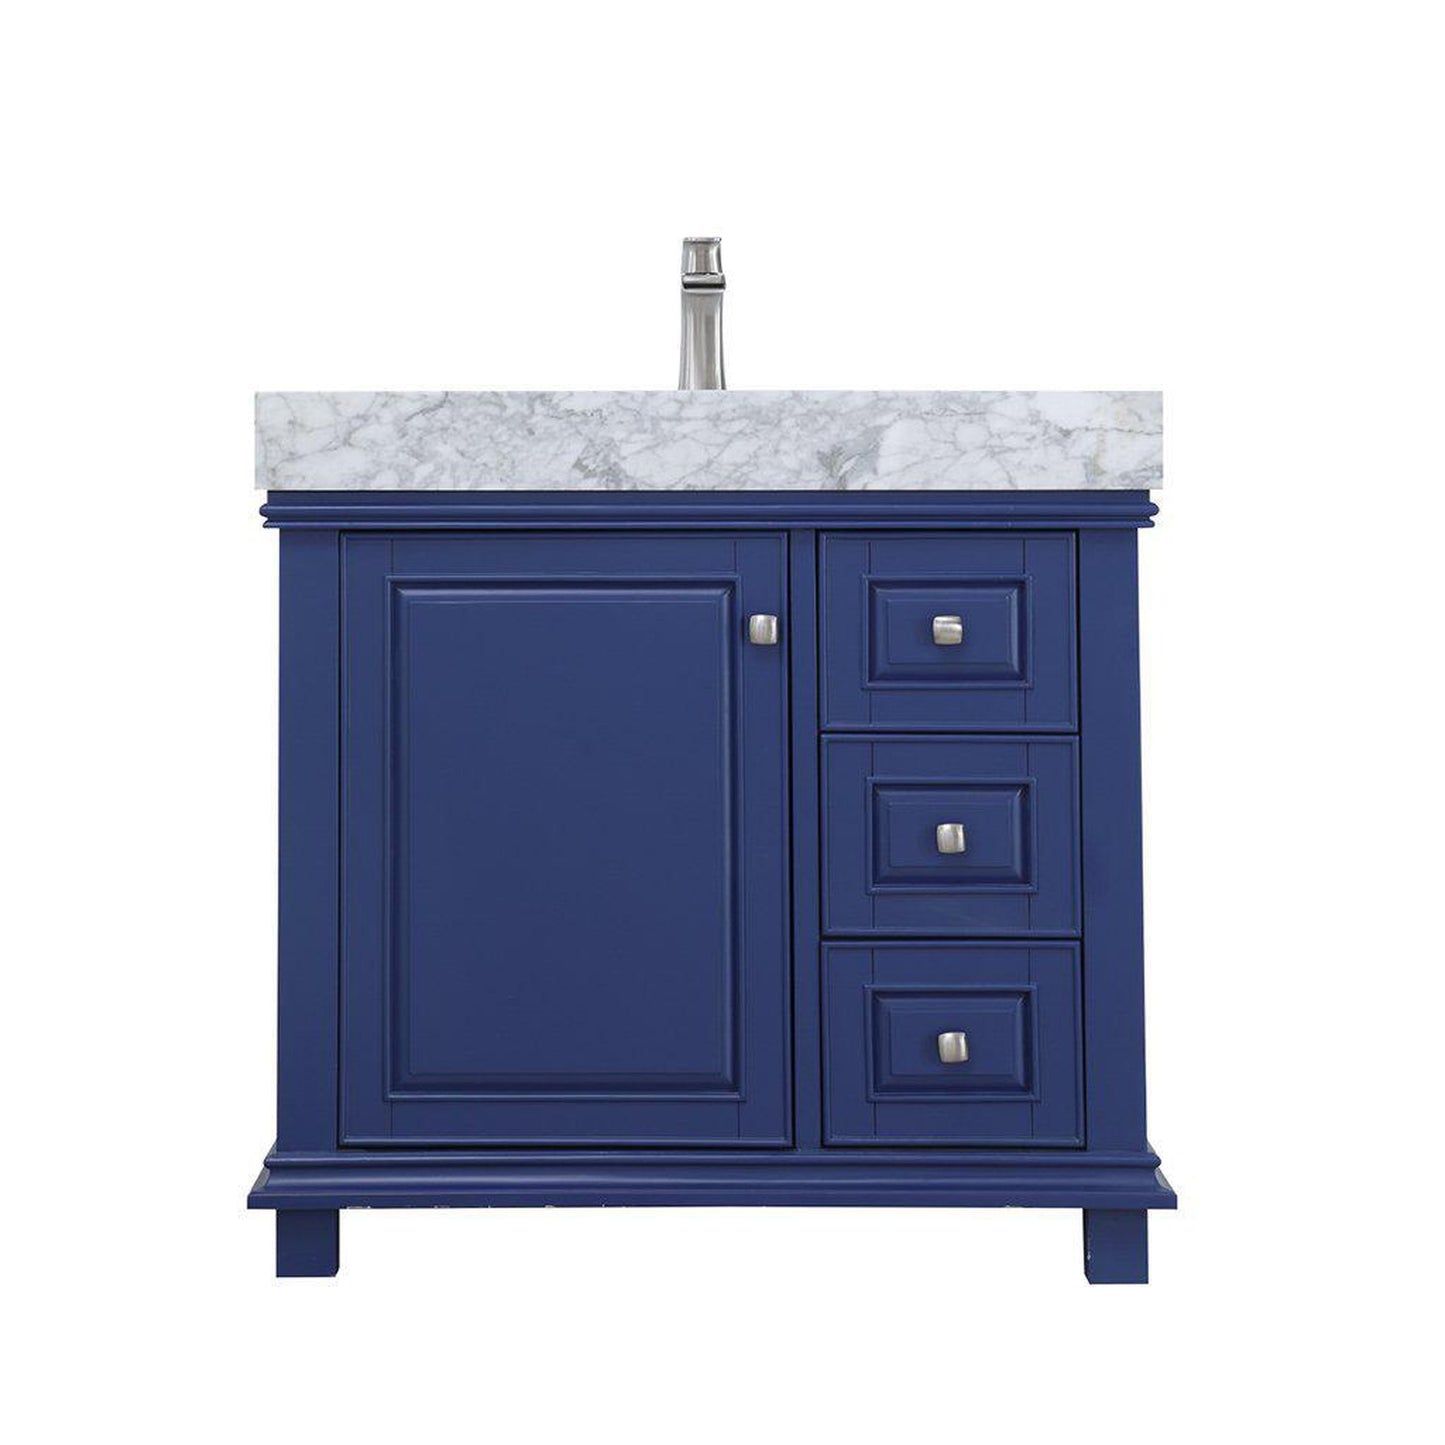 Altair Jardin 36" Single Jewelry Blue Freestanding Bathroom Vanity Set With Natural Carrara White Marble Top, Rectangular Undermount Ceramic Sink, and Overflow